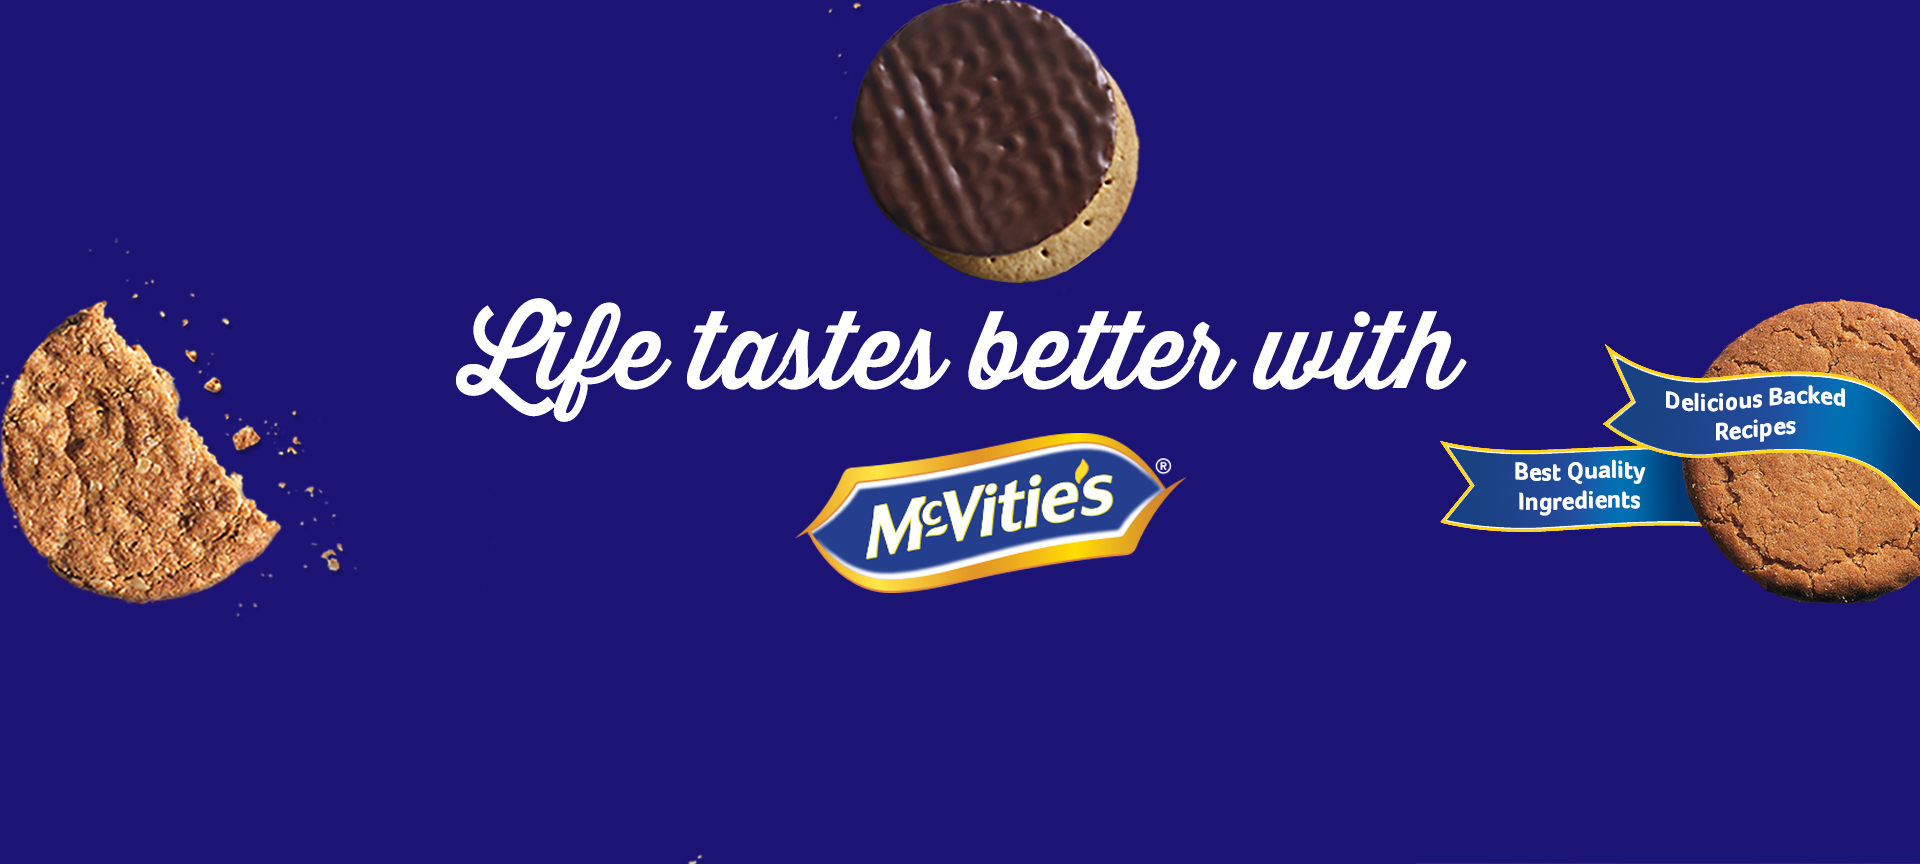 Life taste better with McVitie's nl